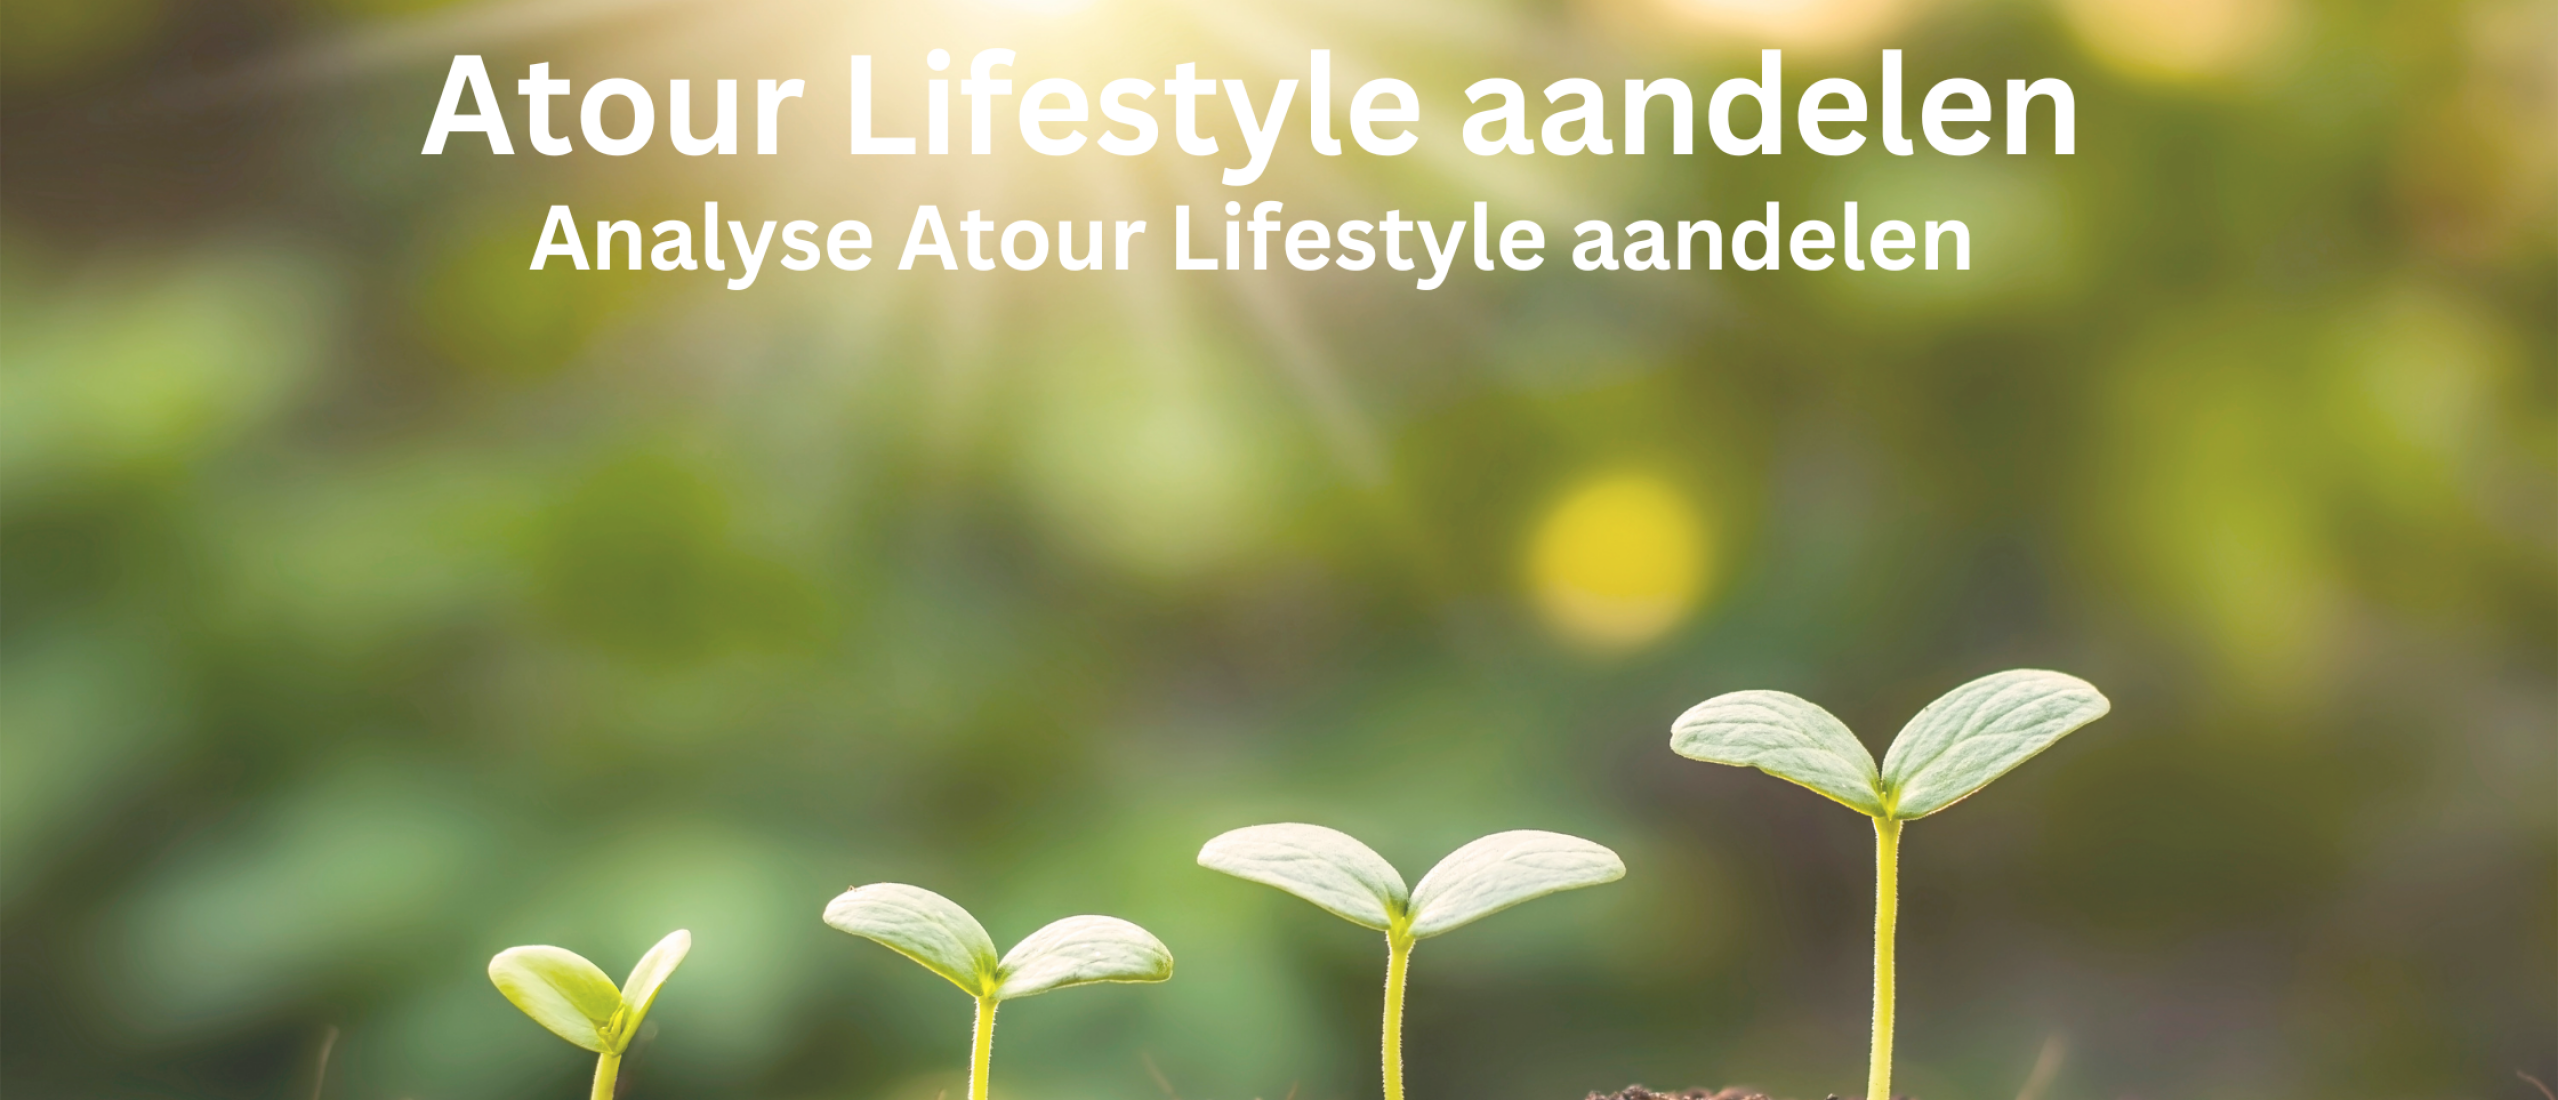 atour-lifestyle-aandelen-analyse-